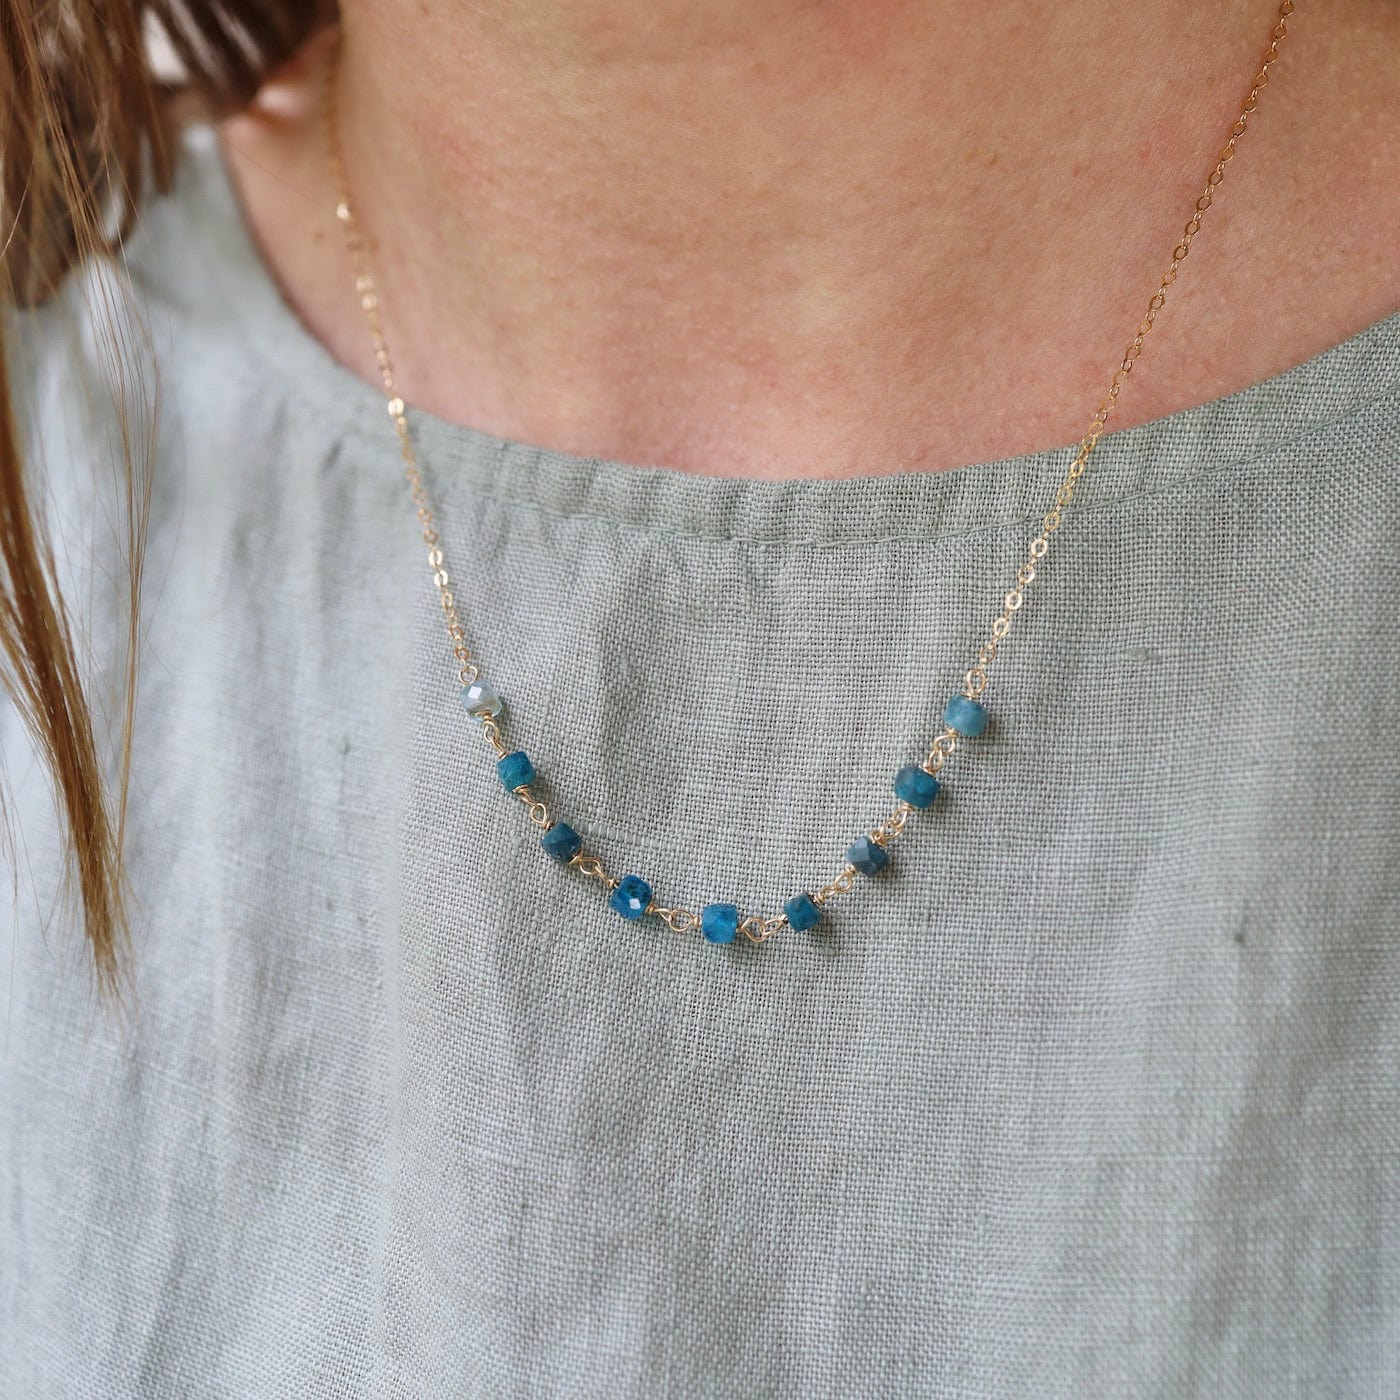 NKL-GF Apatite Handmade Bead Chain Necklace